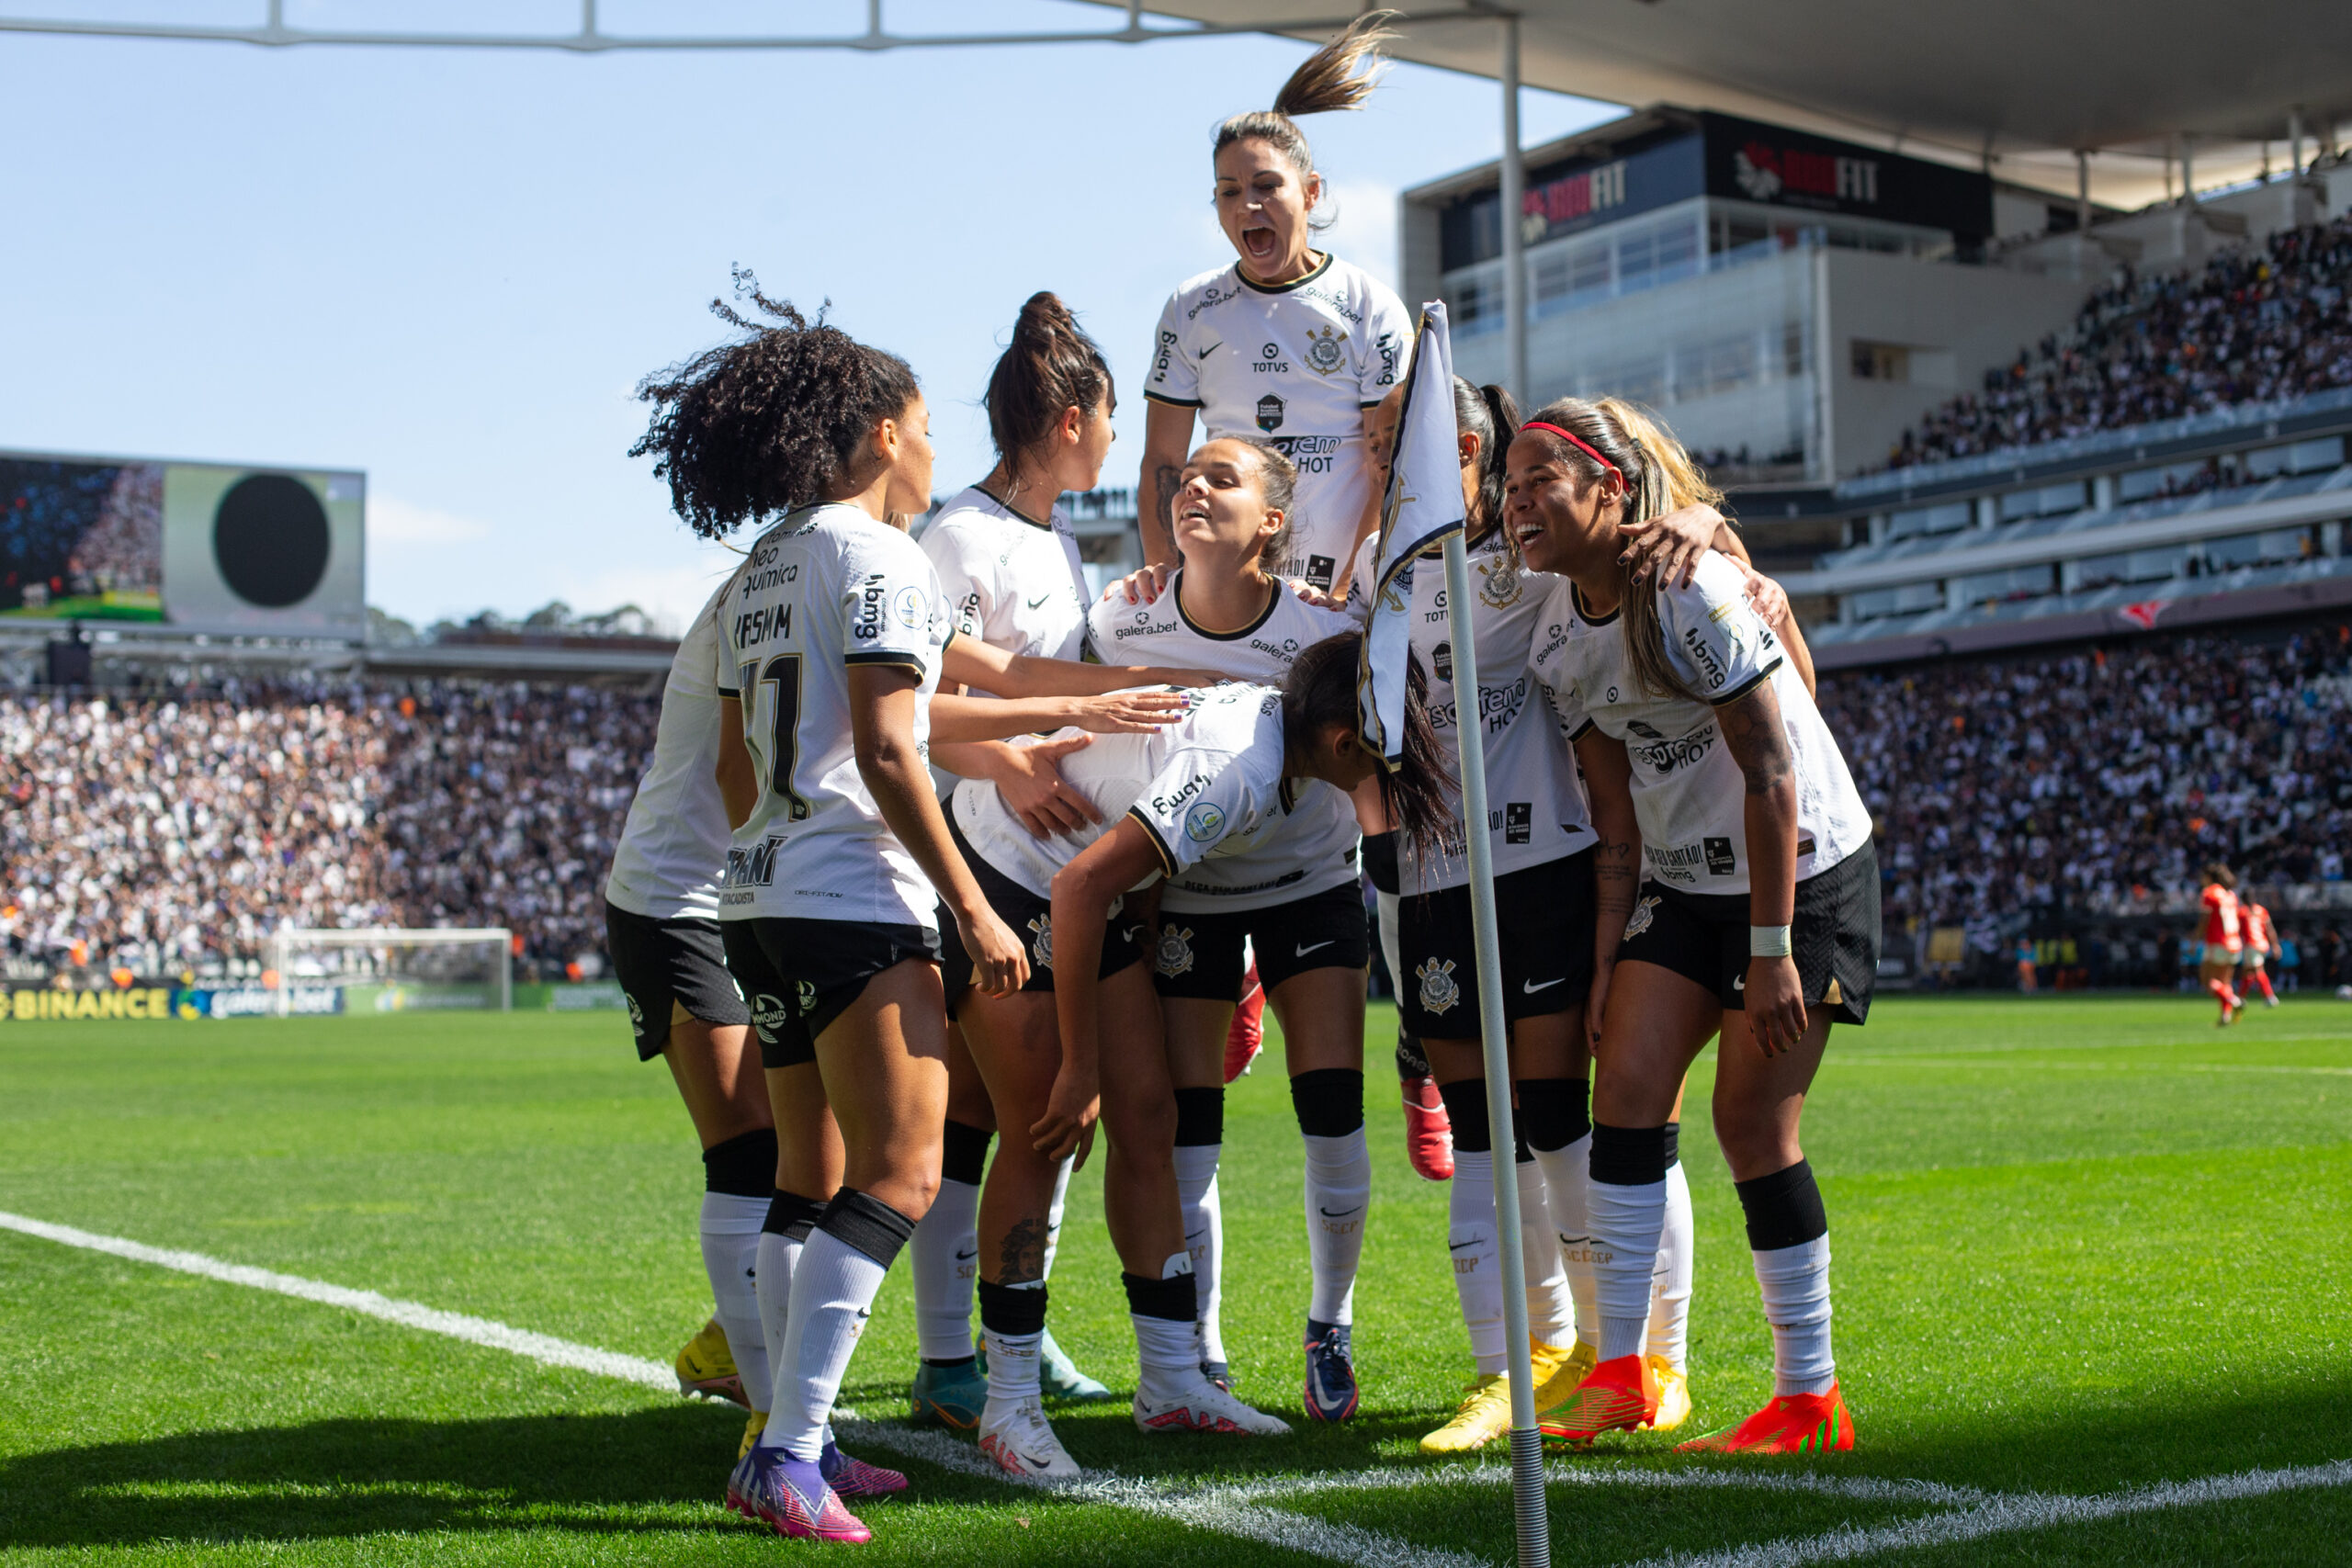 Corinthians vence o Internacional e disputa final da Supercopa